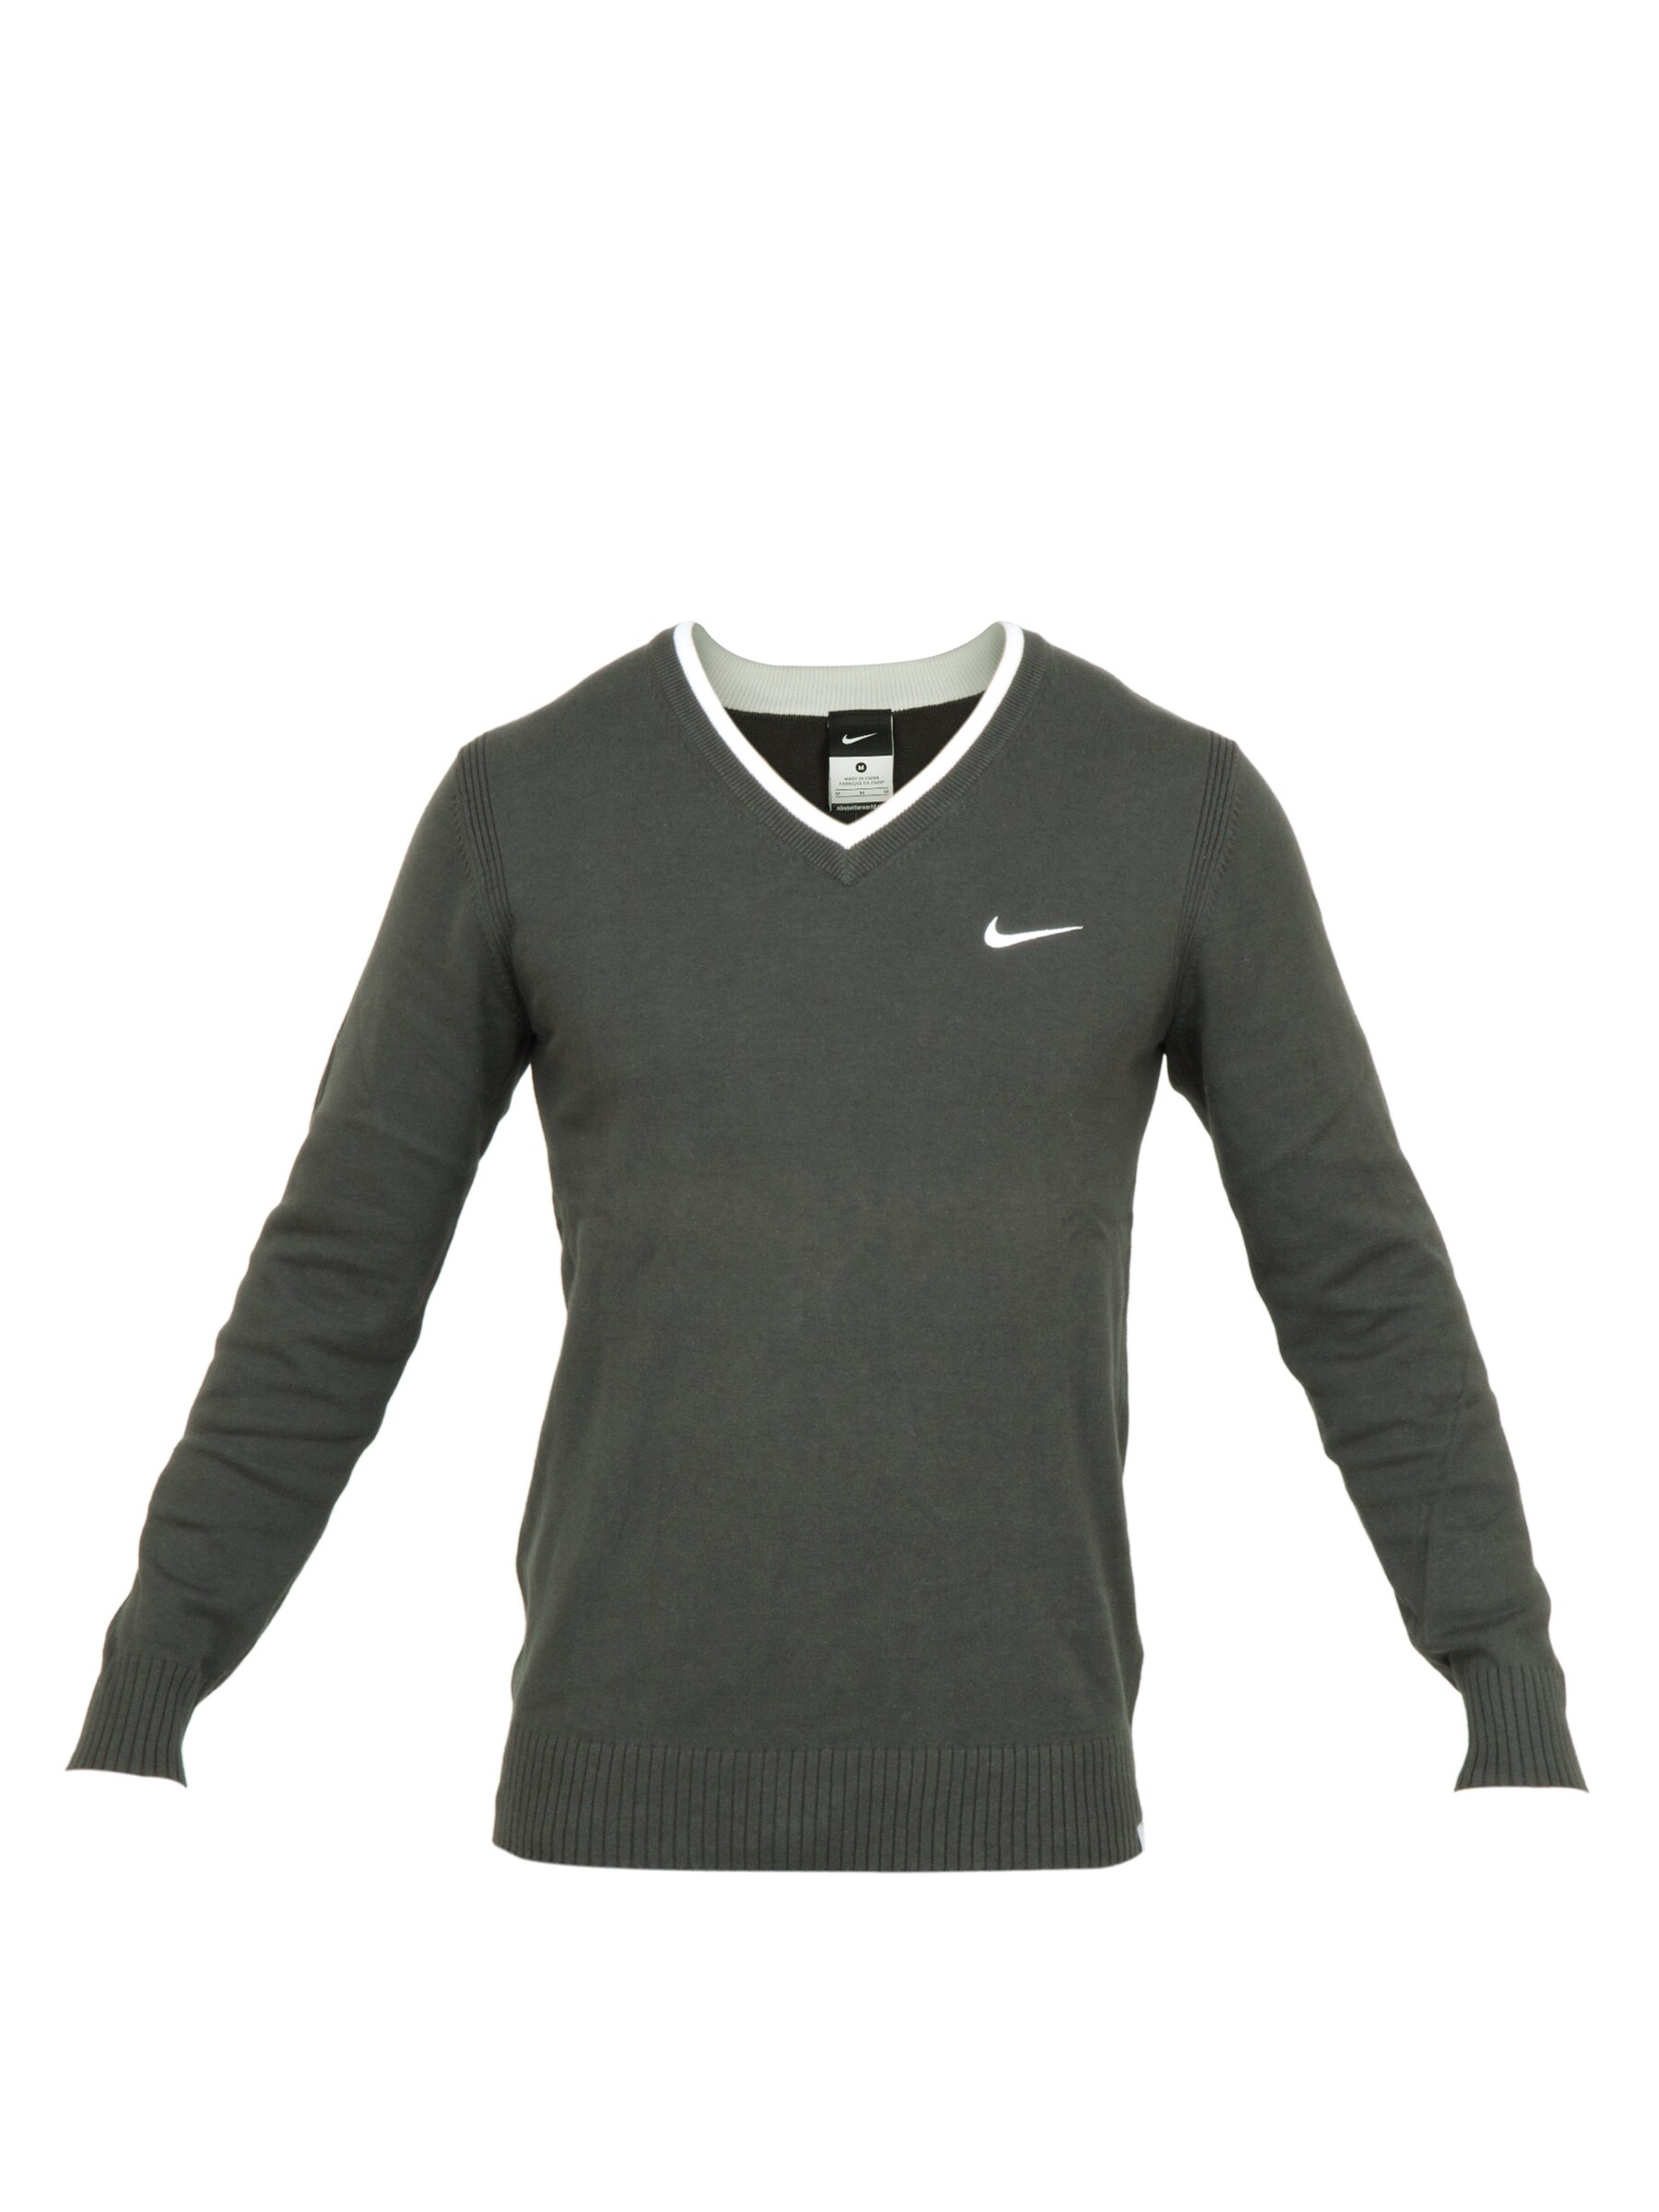 Nike Men Solid Grey Sweater